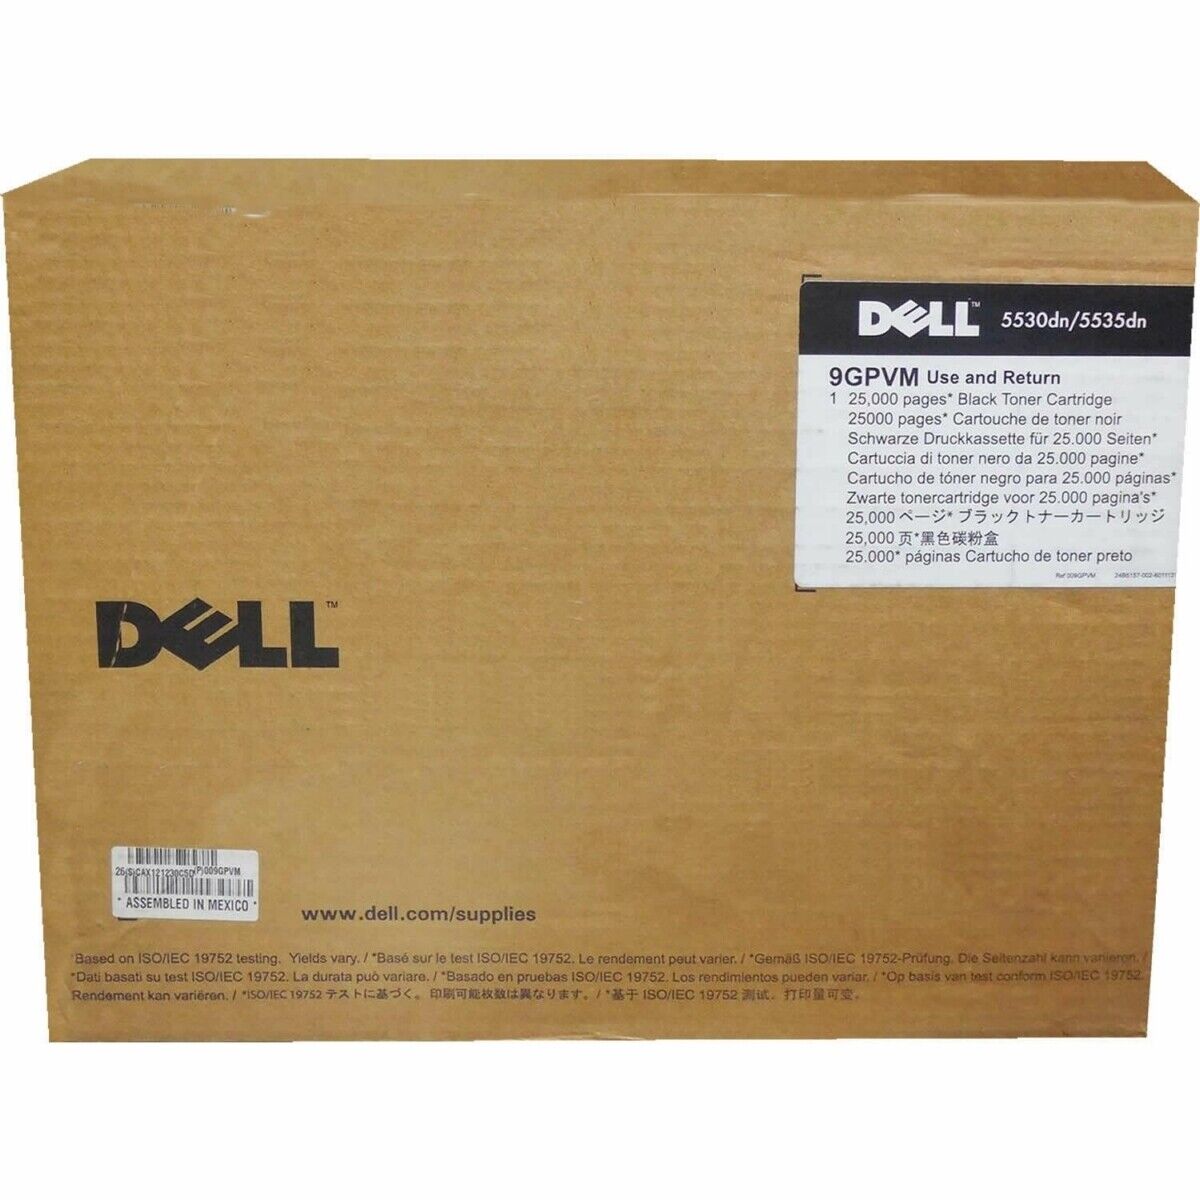 NEW SEALED Dell 9GPVM 5330dn/5535dn BLACK Toner Cartridge 25,000 PG (1TMYH)